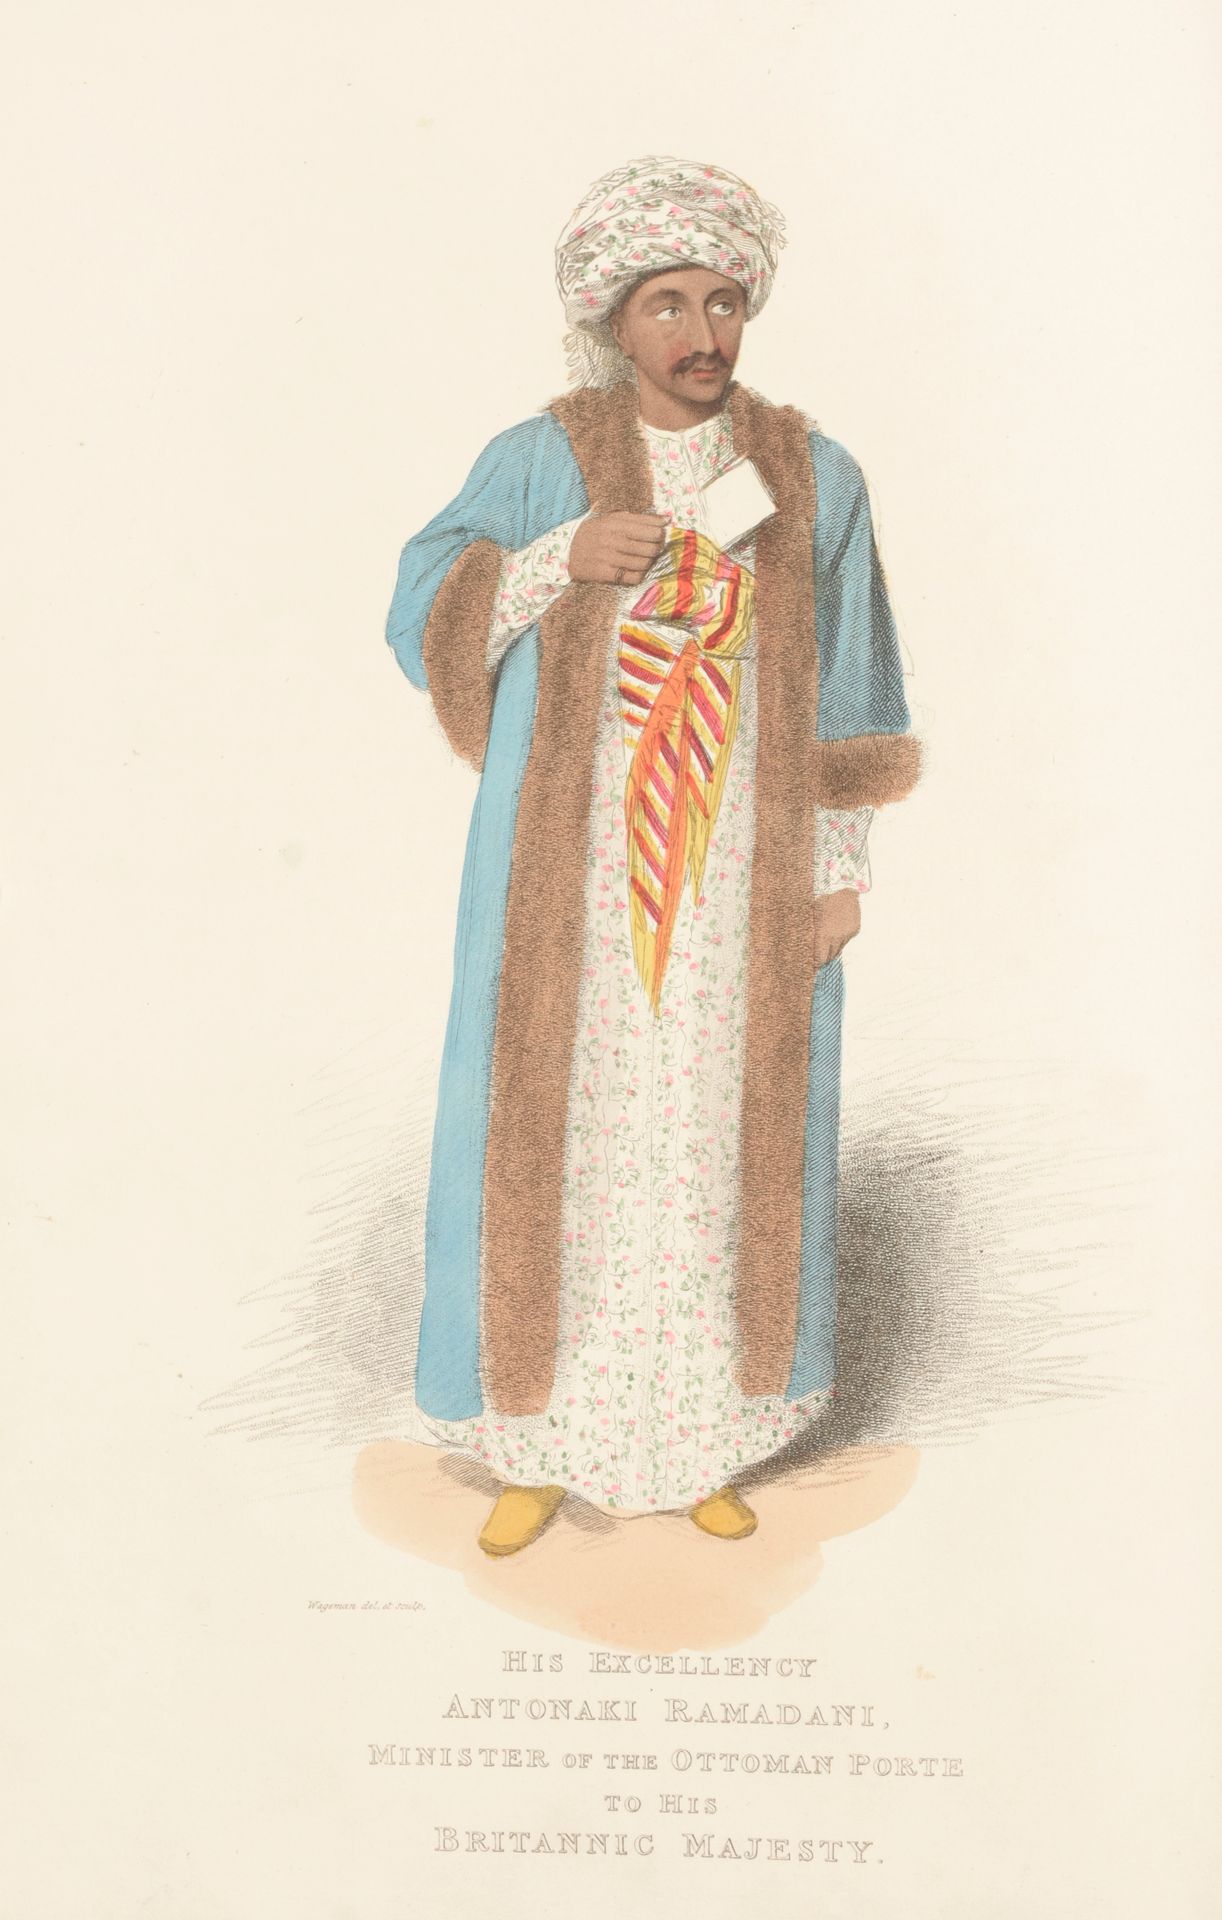 [WAGEMAN, Thomas Charles] The Military Costume of Turkey

London
T. M'Lean
1818
&hellip;